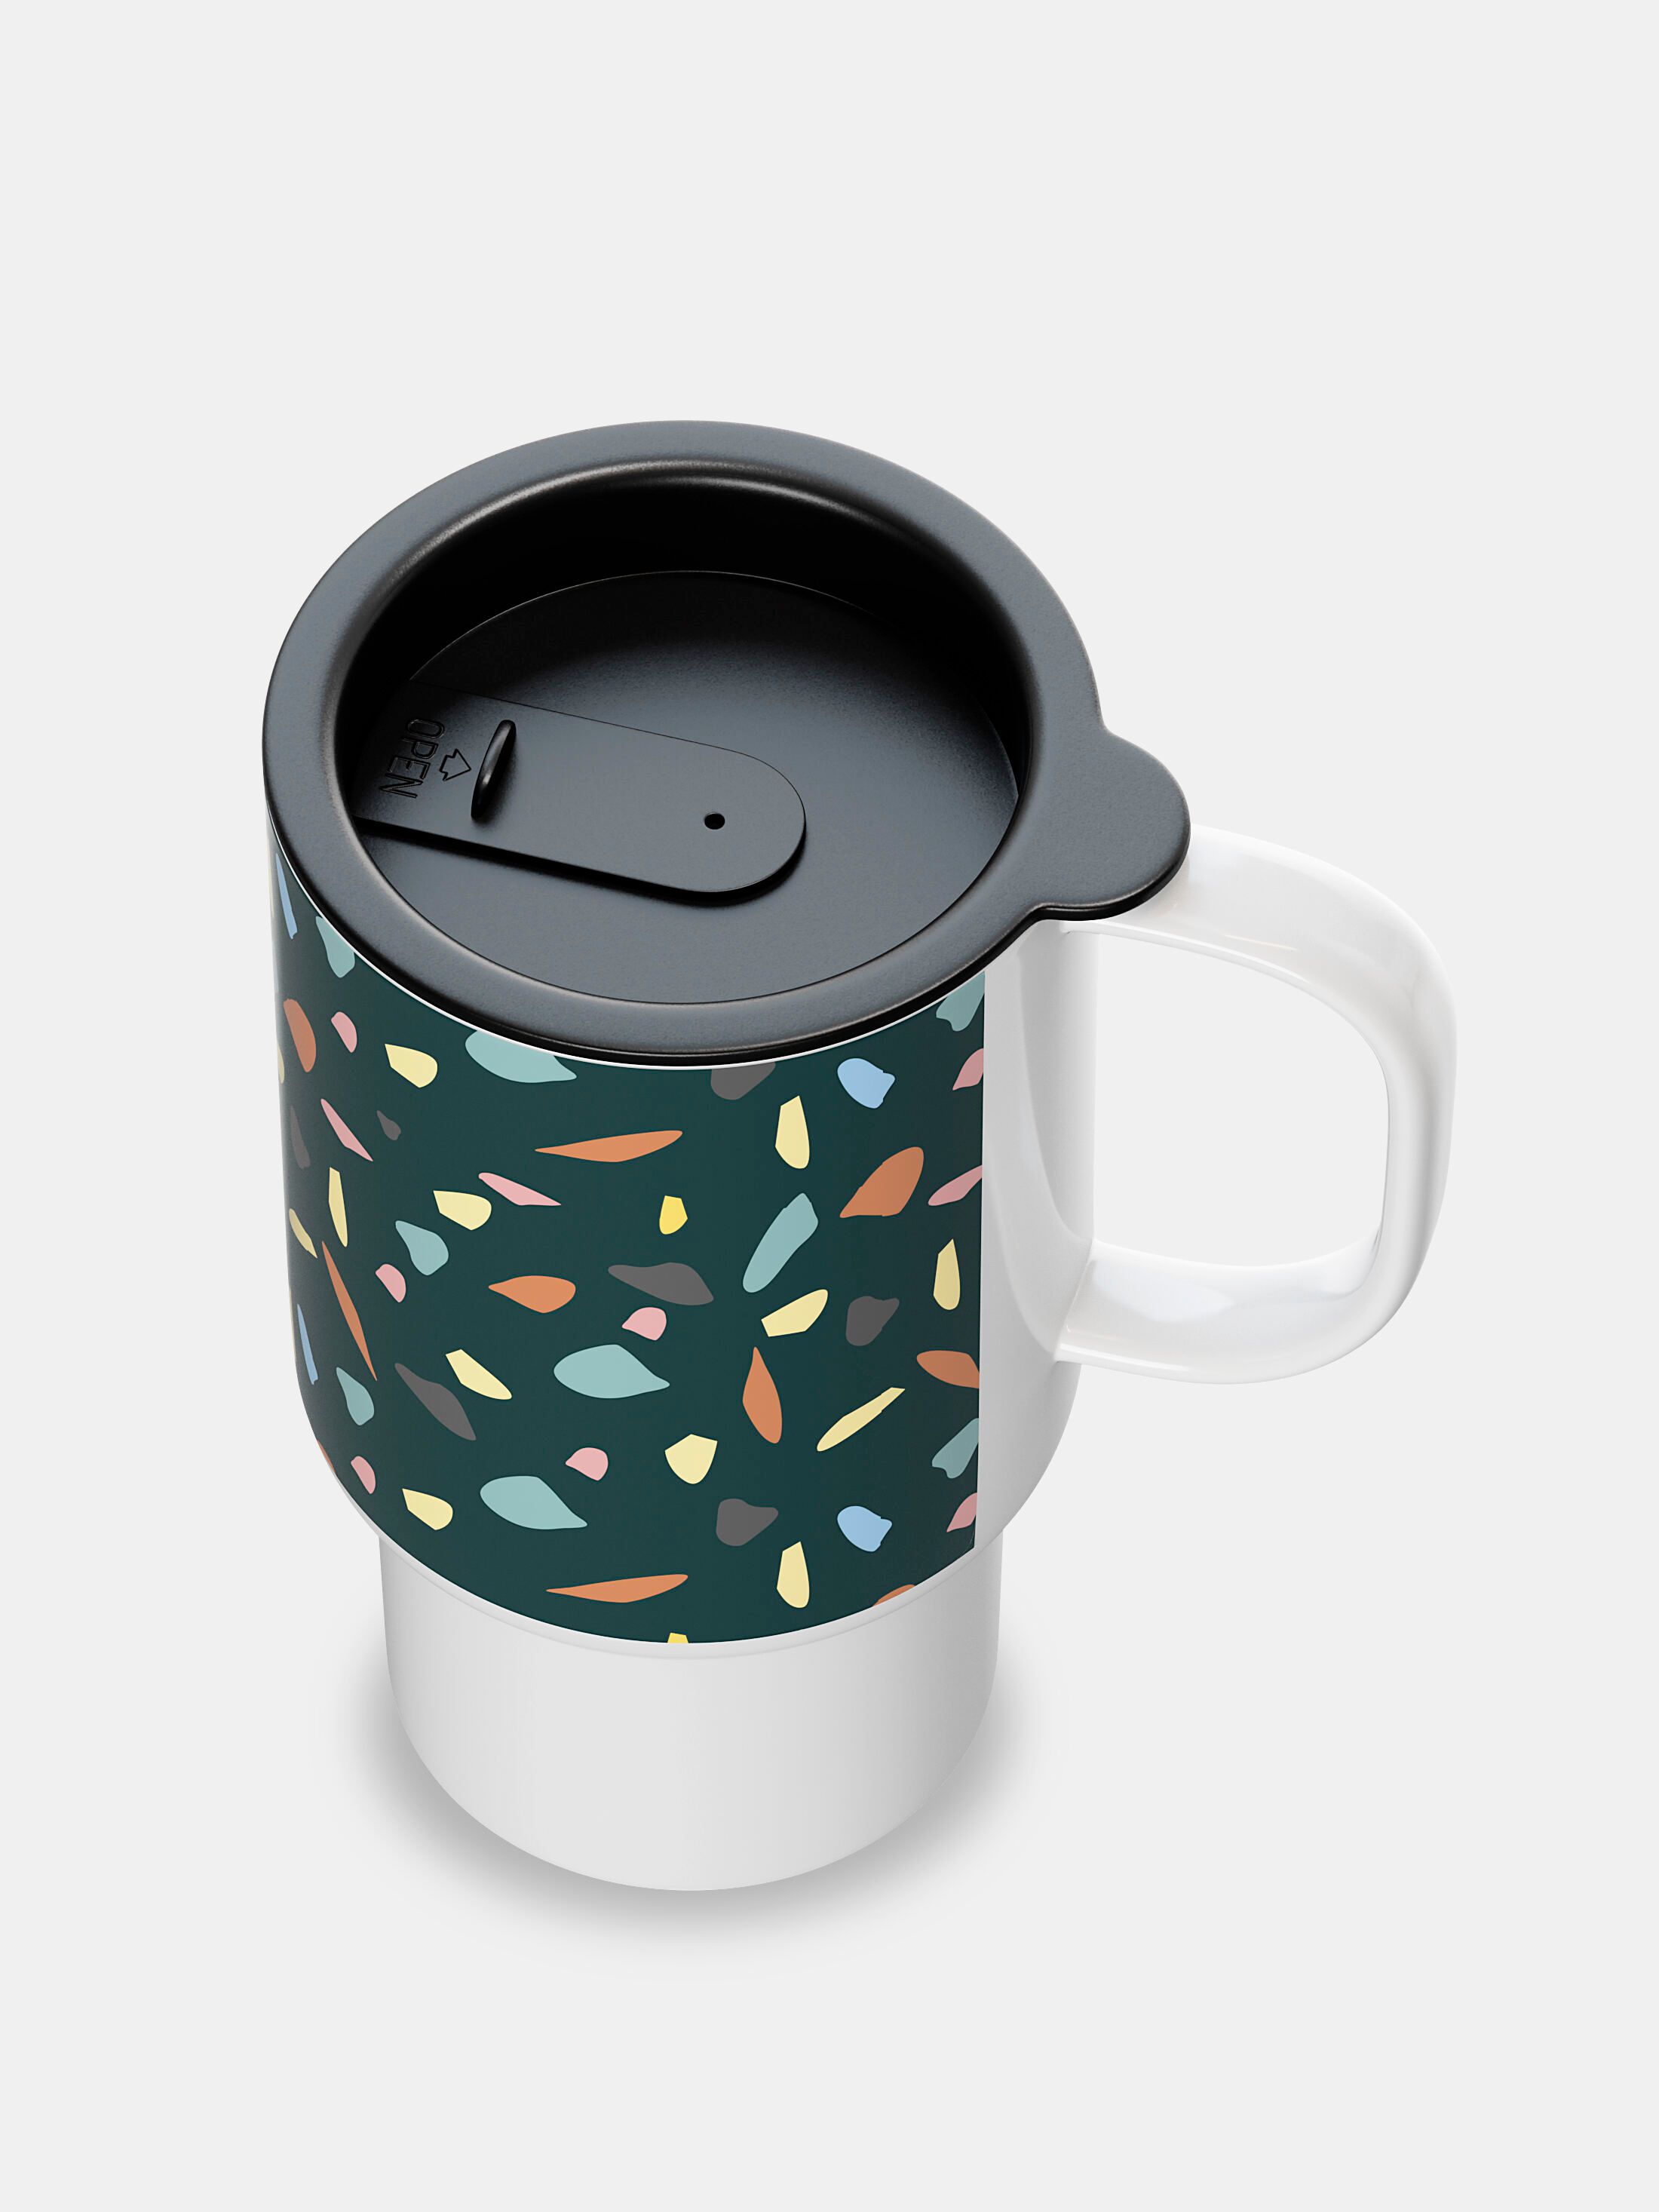 Open Travel mug design printed